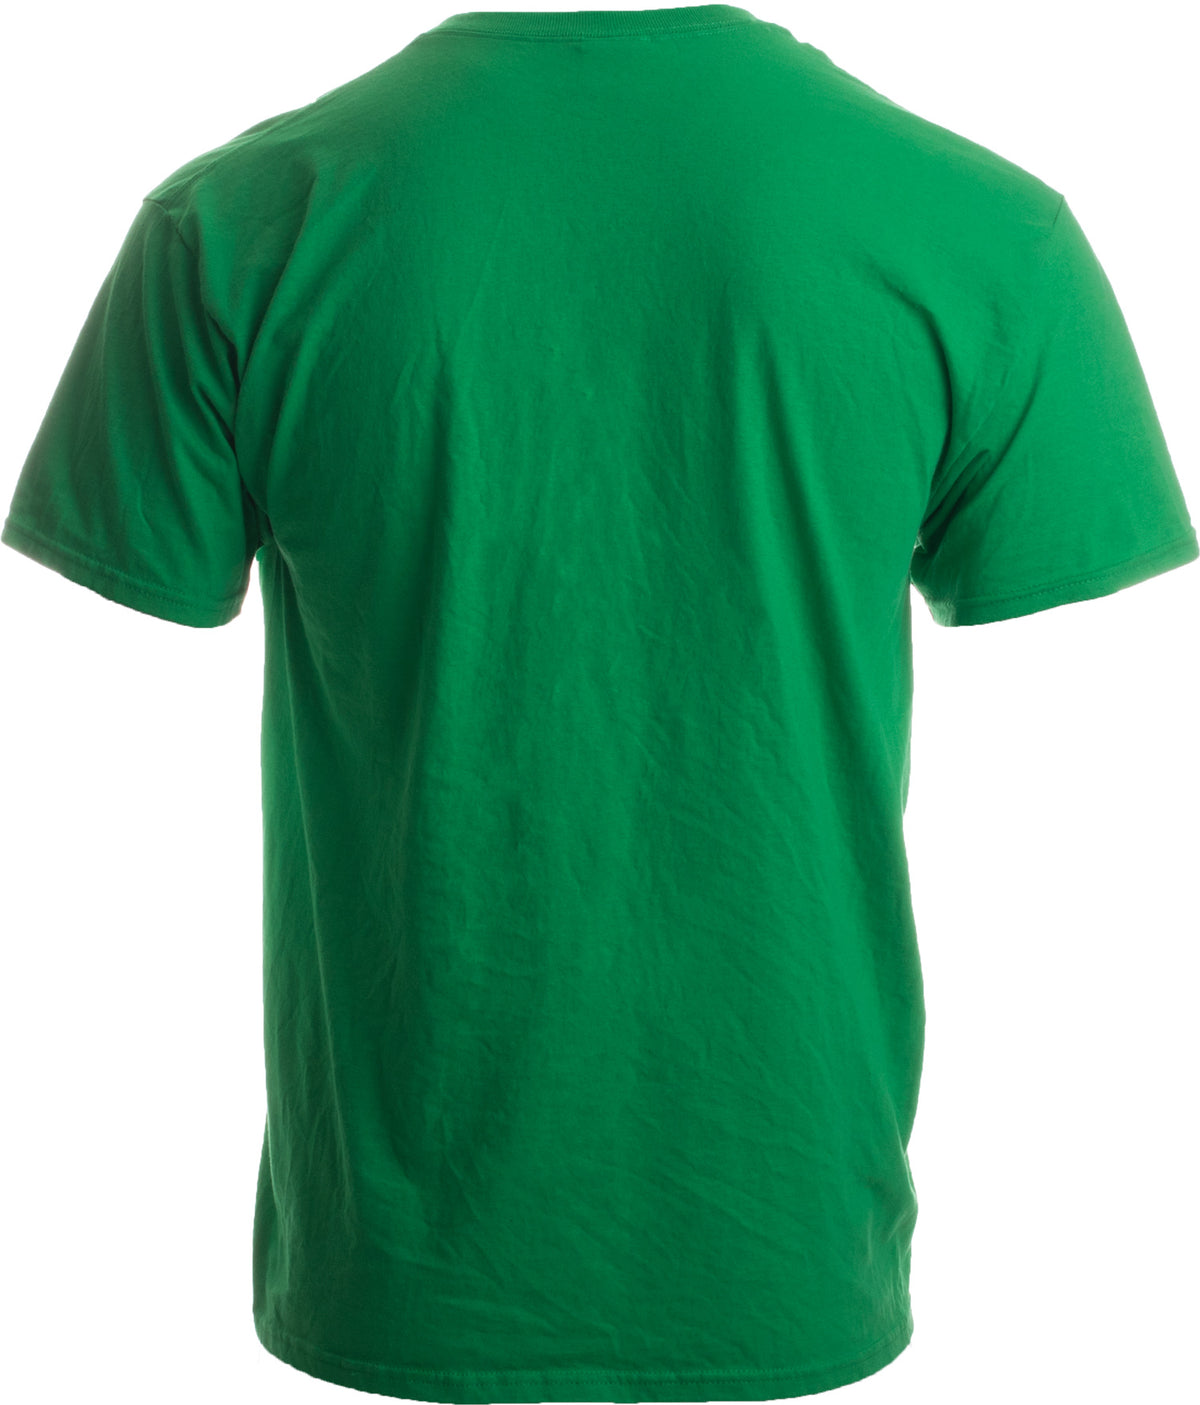 BRAZIL NATIONAL FLAG Unisex T-shirt / Bandeira do Brasil,  Brazilian-Green,Man-Small – Ann Arbor T-shirt Company